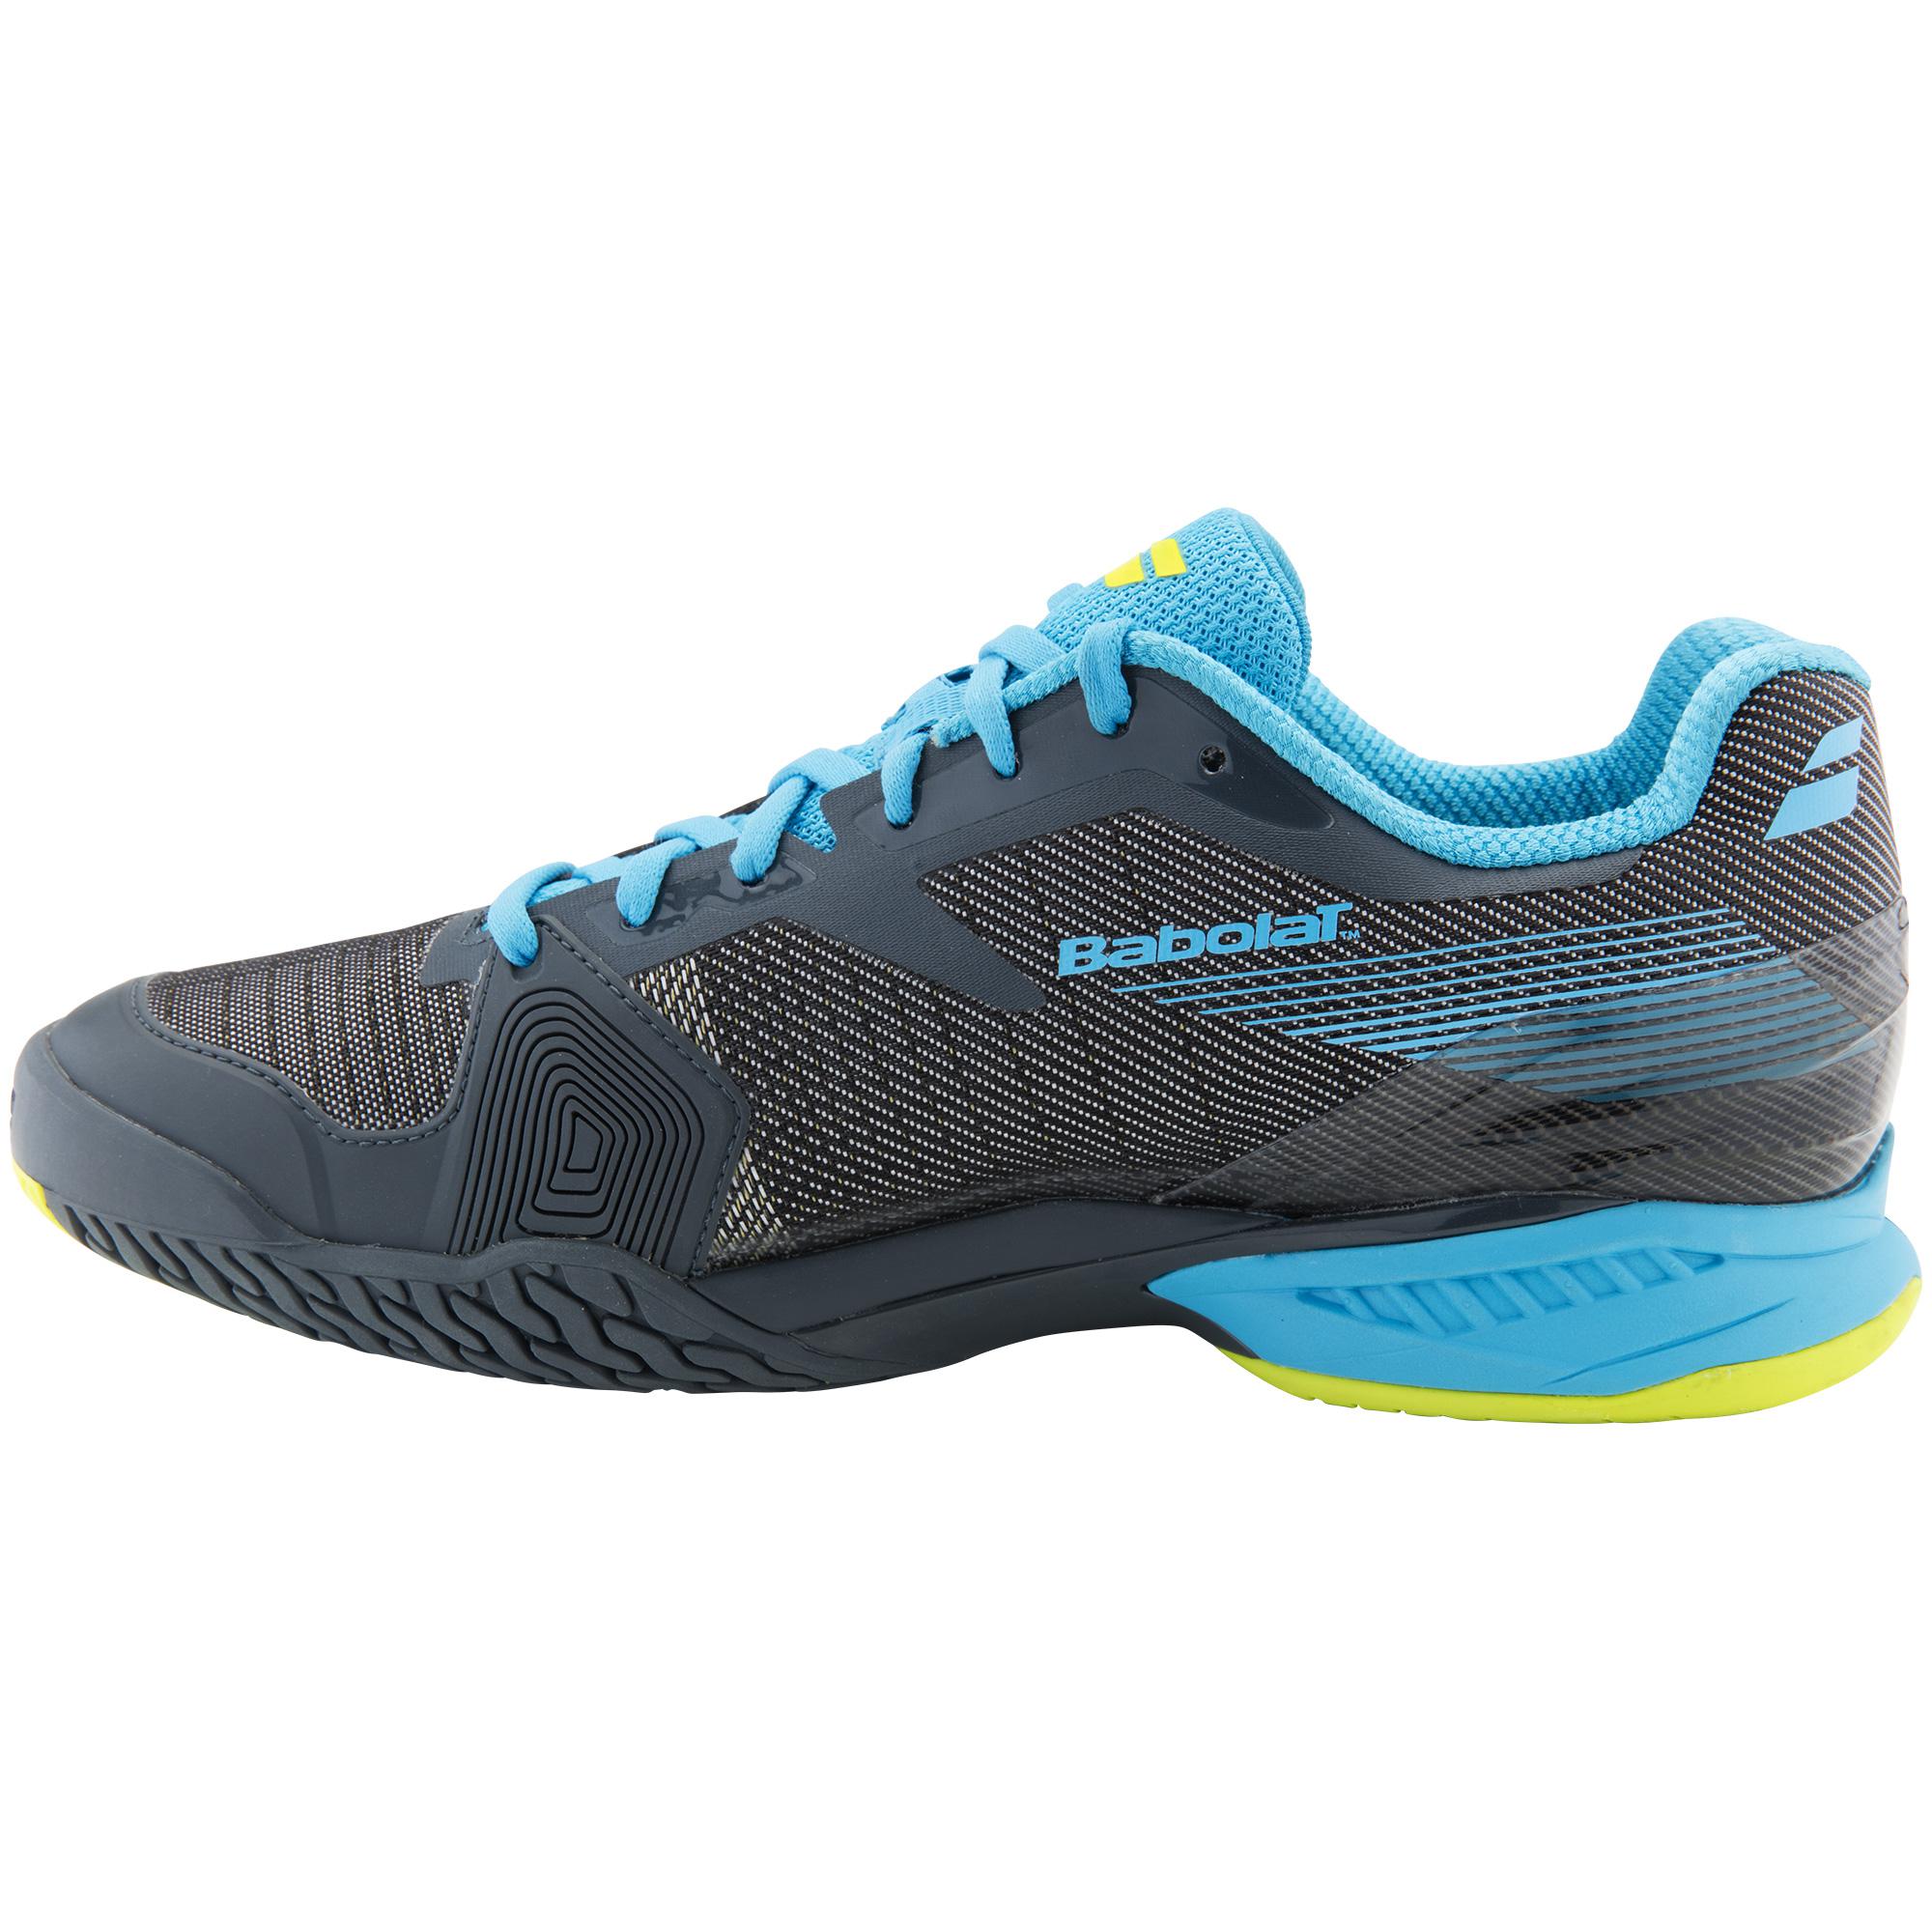 Babolat Mens Jet All Court Tennis Shoes - Grey/Blue - Tennisnuts.com